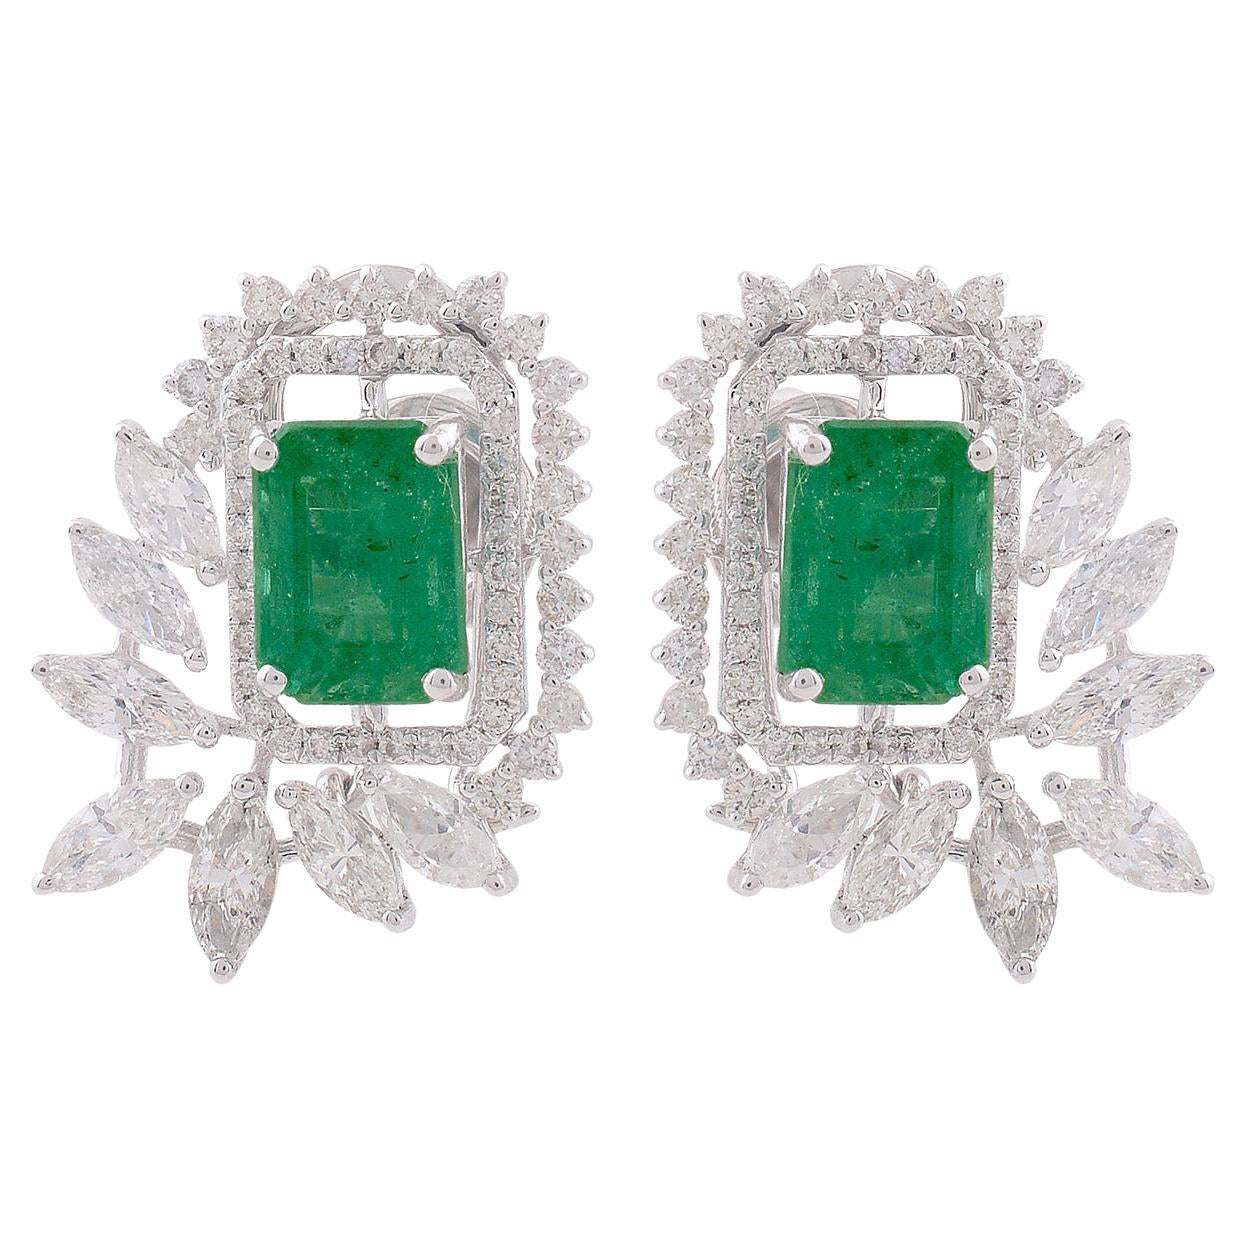 3.06 Carat Emerald Diamond 14 Karat Gold Earrings